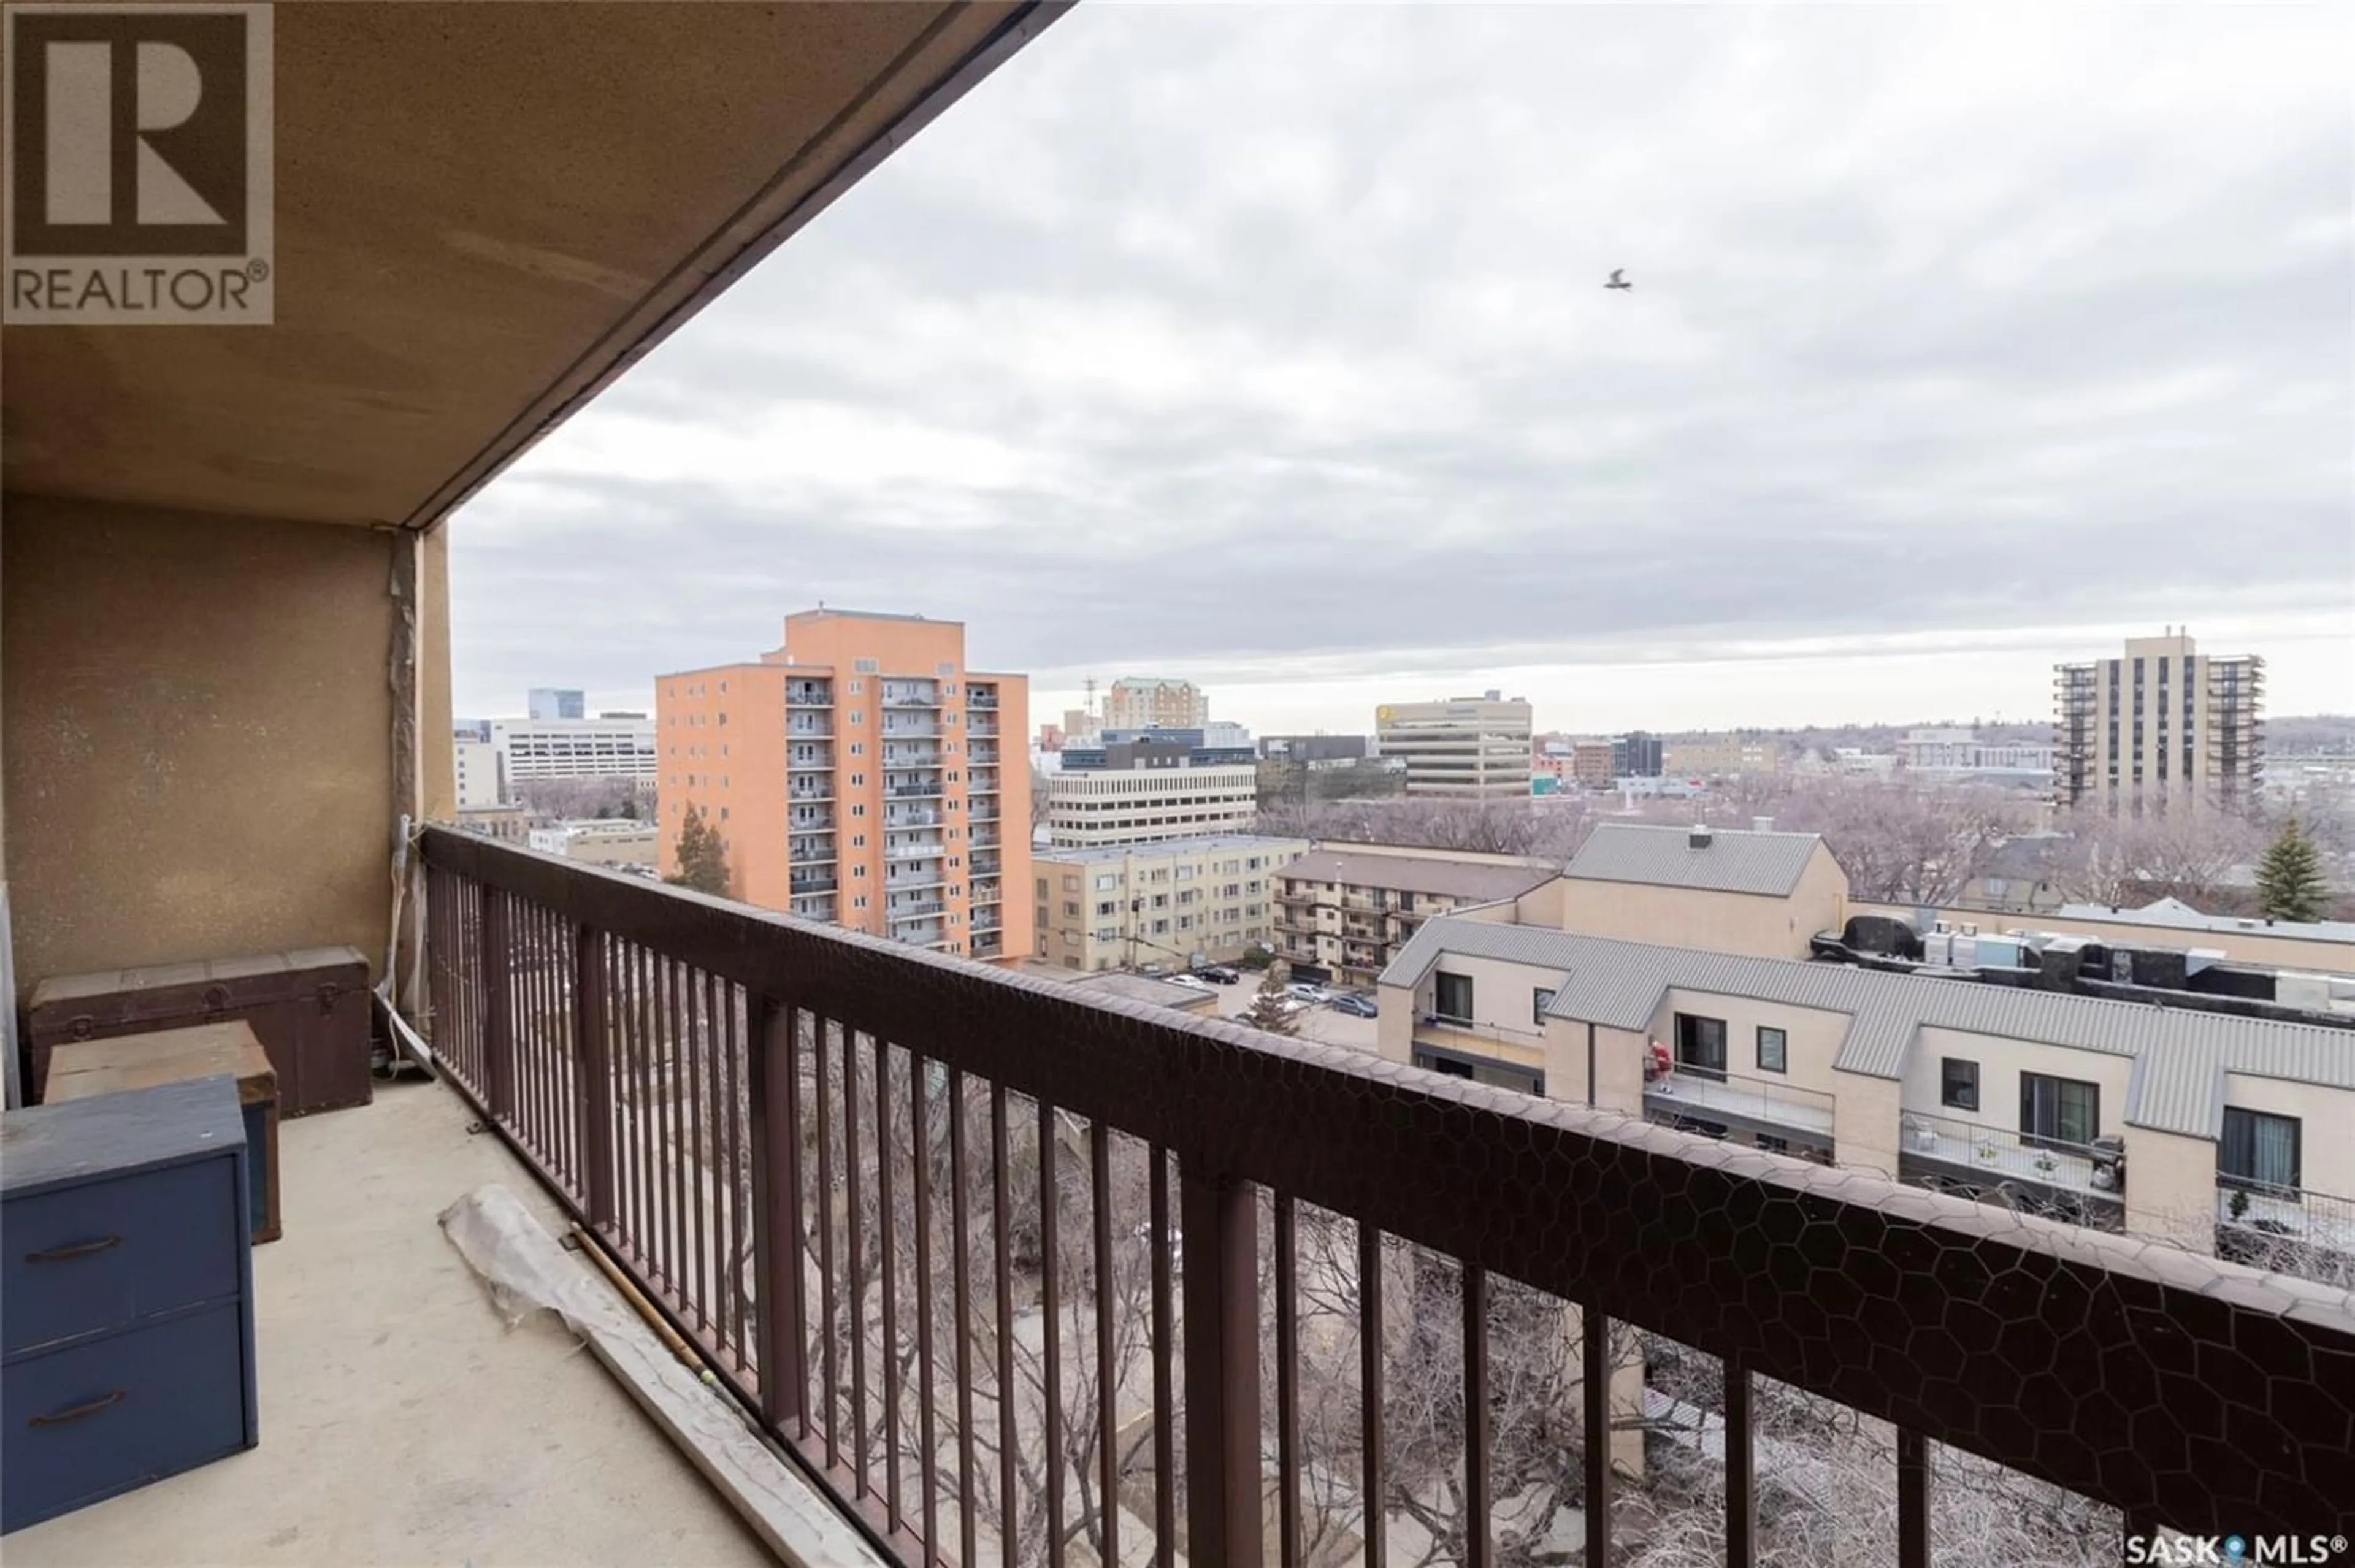 Balcony in the apartment for 1004 430 5th AVENUE N, Saskatoon Saskatchewan S7K6Z7